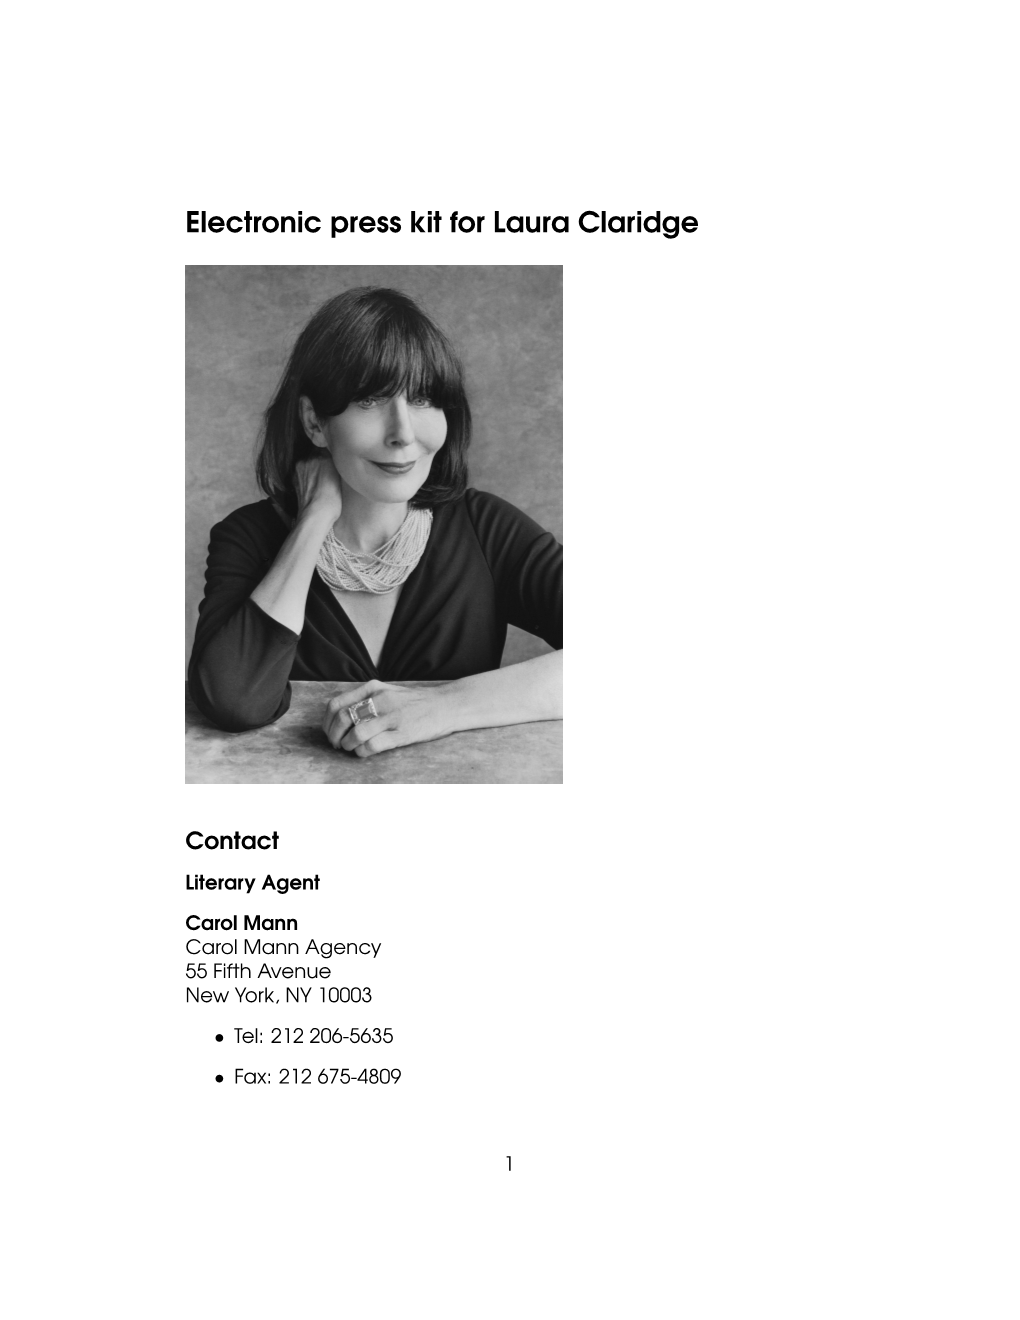 Electronic Press Kit for Laura Claridge